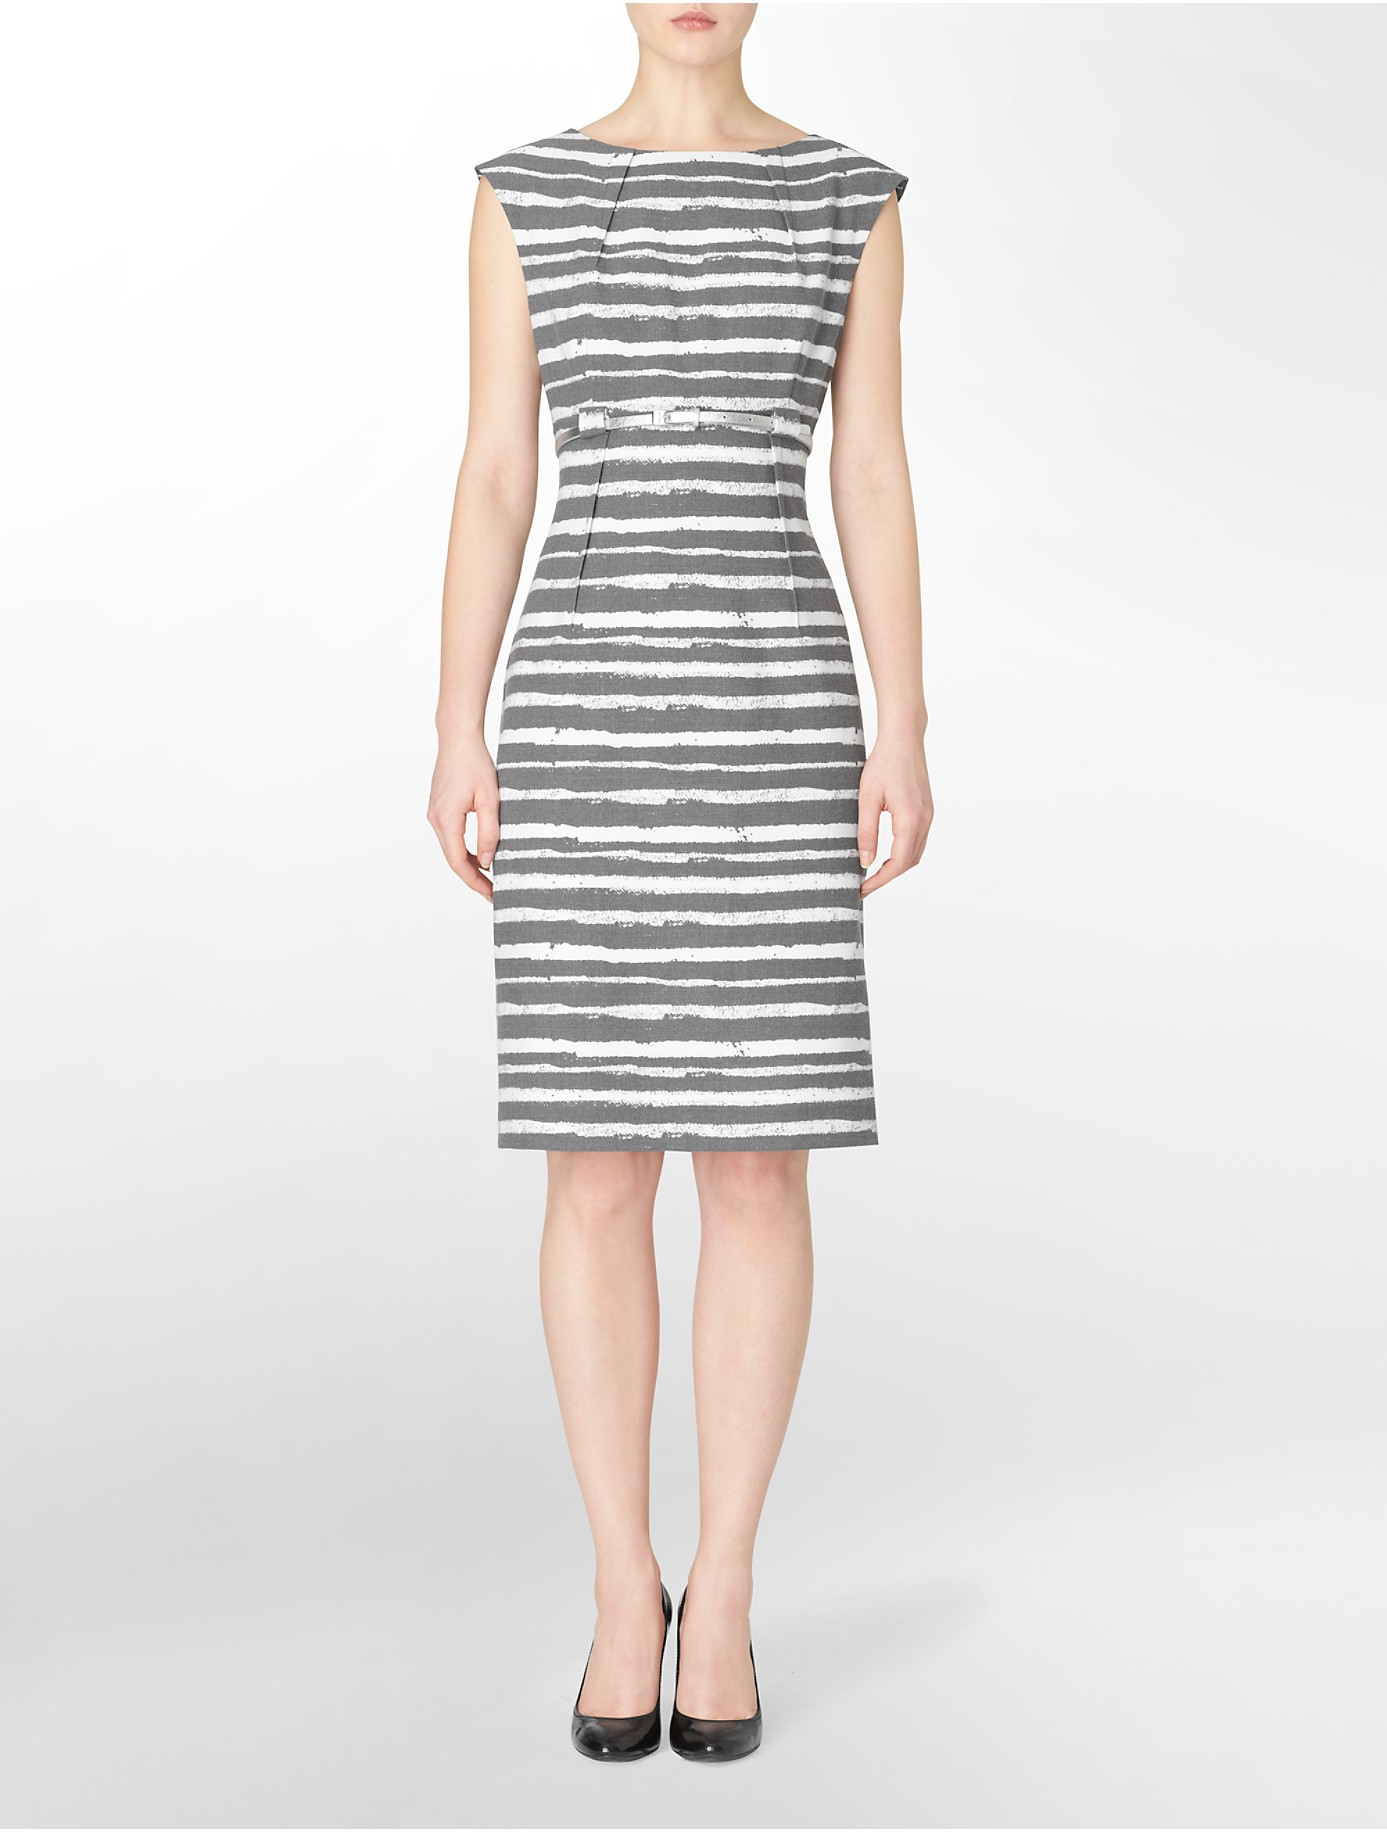 Introducir 56+ imagen calvin klein grey and white striped dress